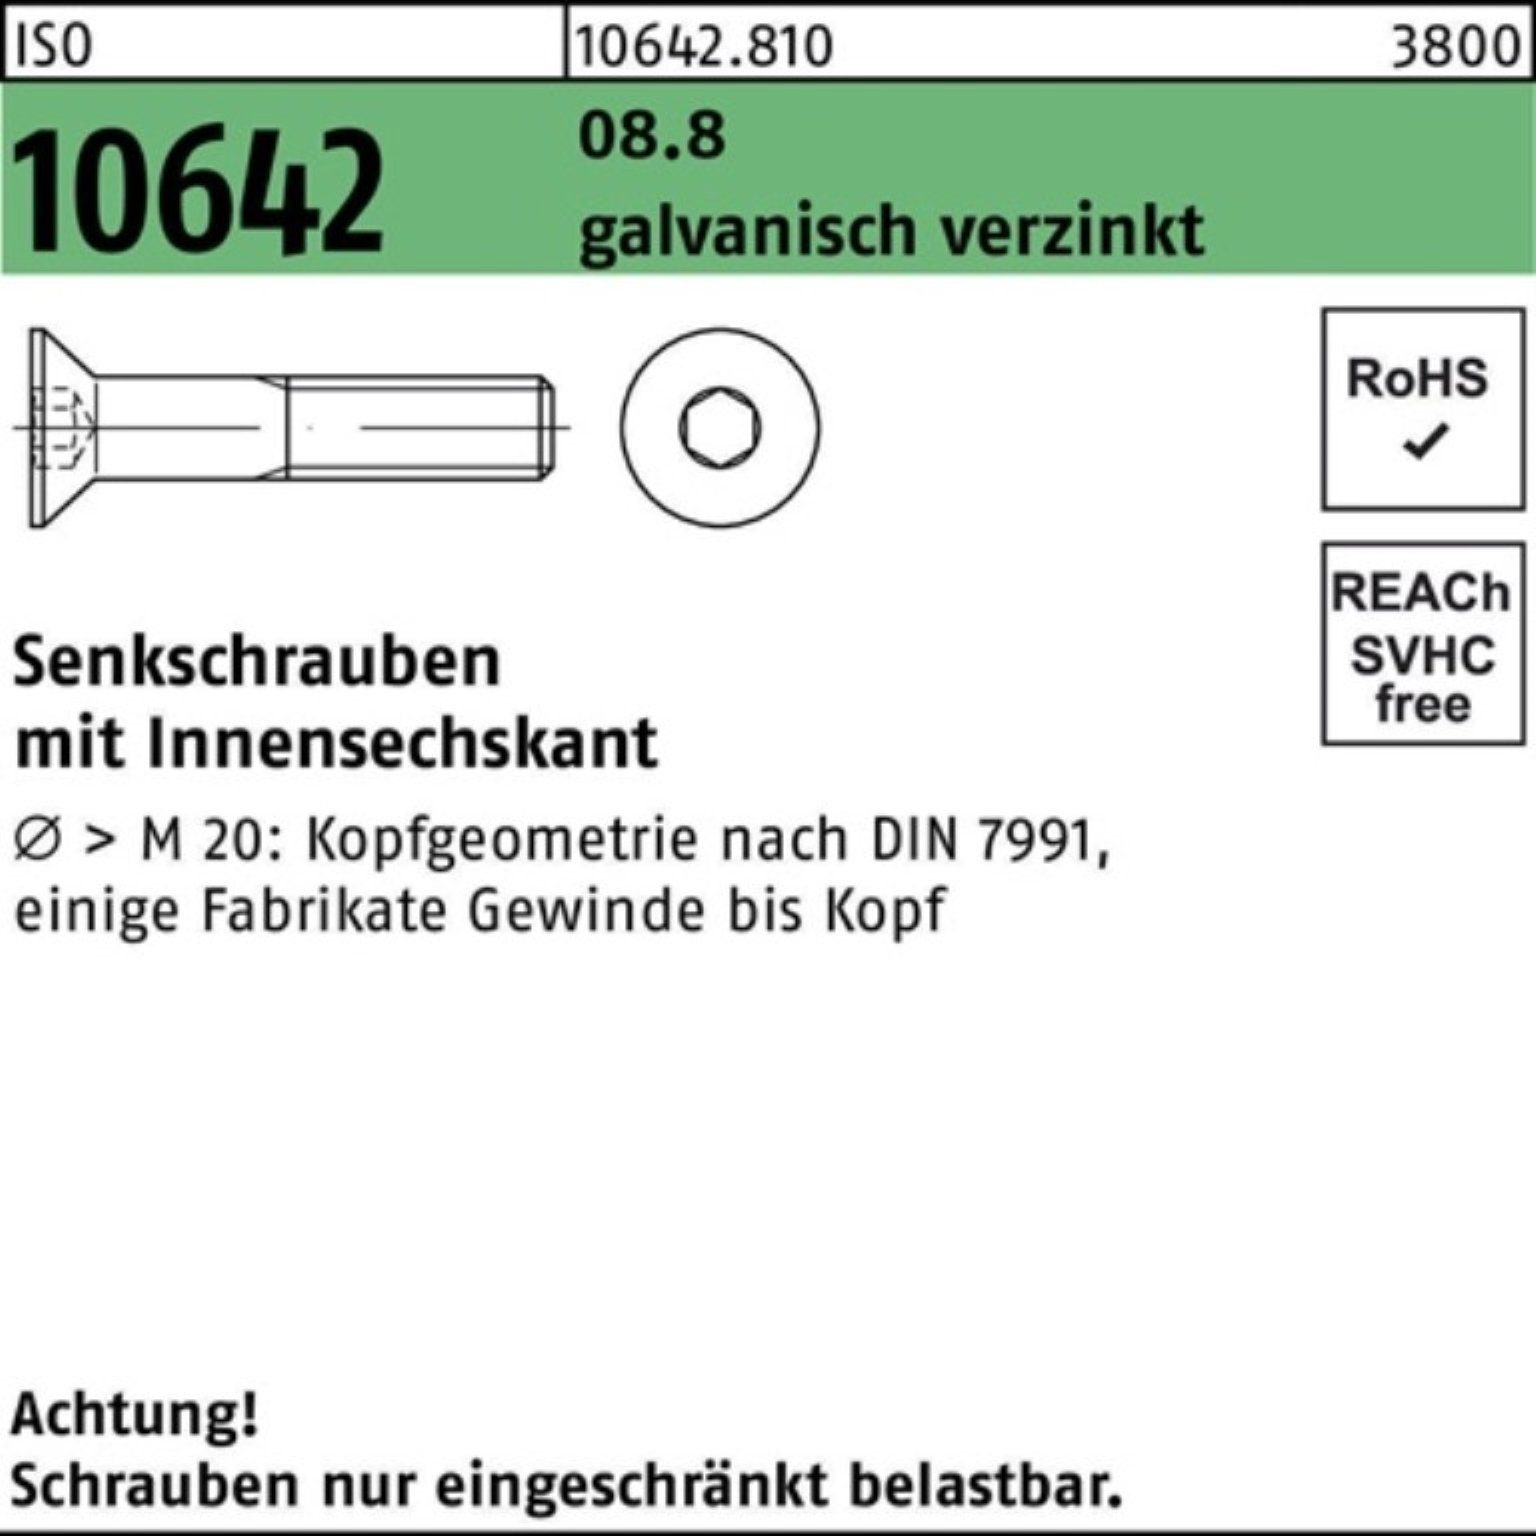 Senkschraube Reyher 70 Innen-6kt galv.verz. Pack ISO Senkschraube 25 M20x 8.8 10642 100er